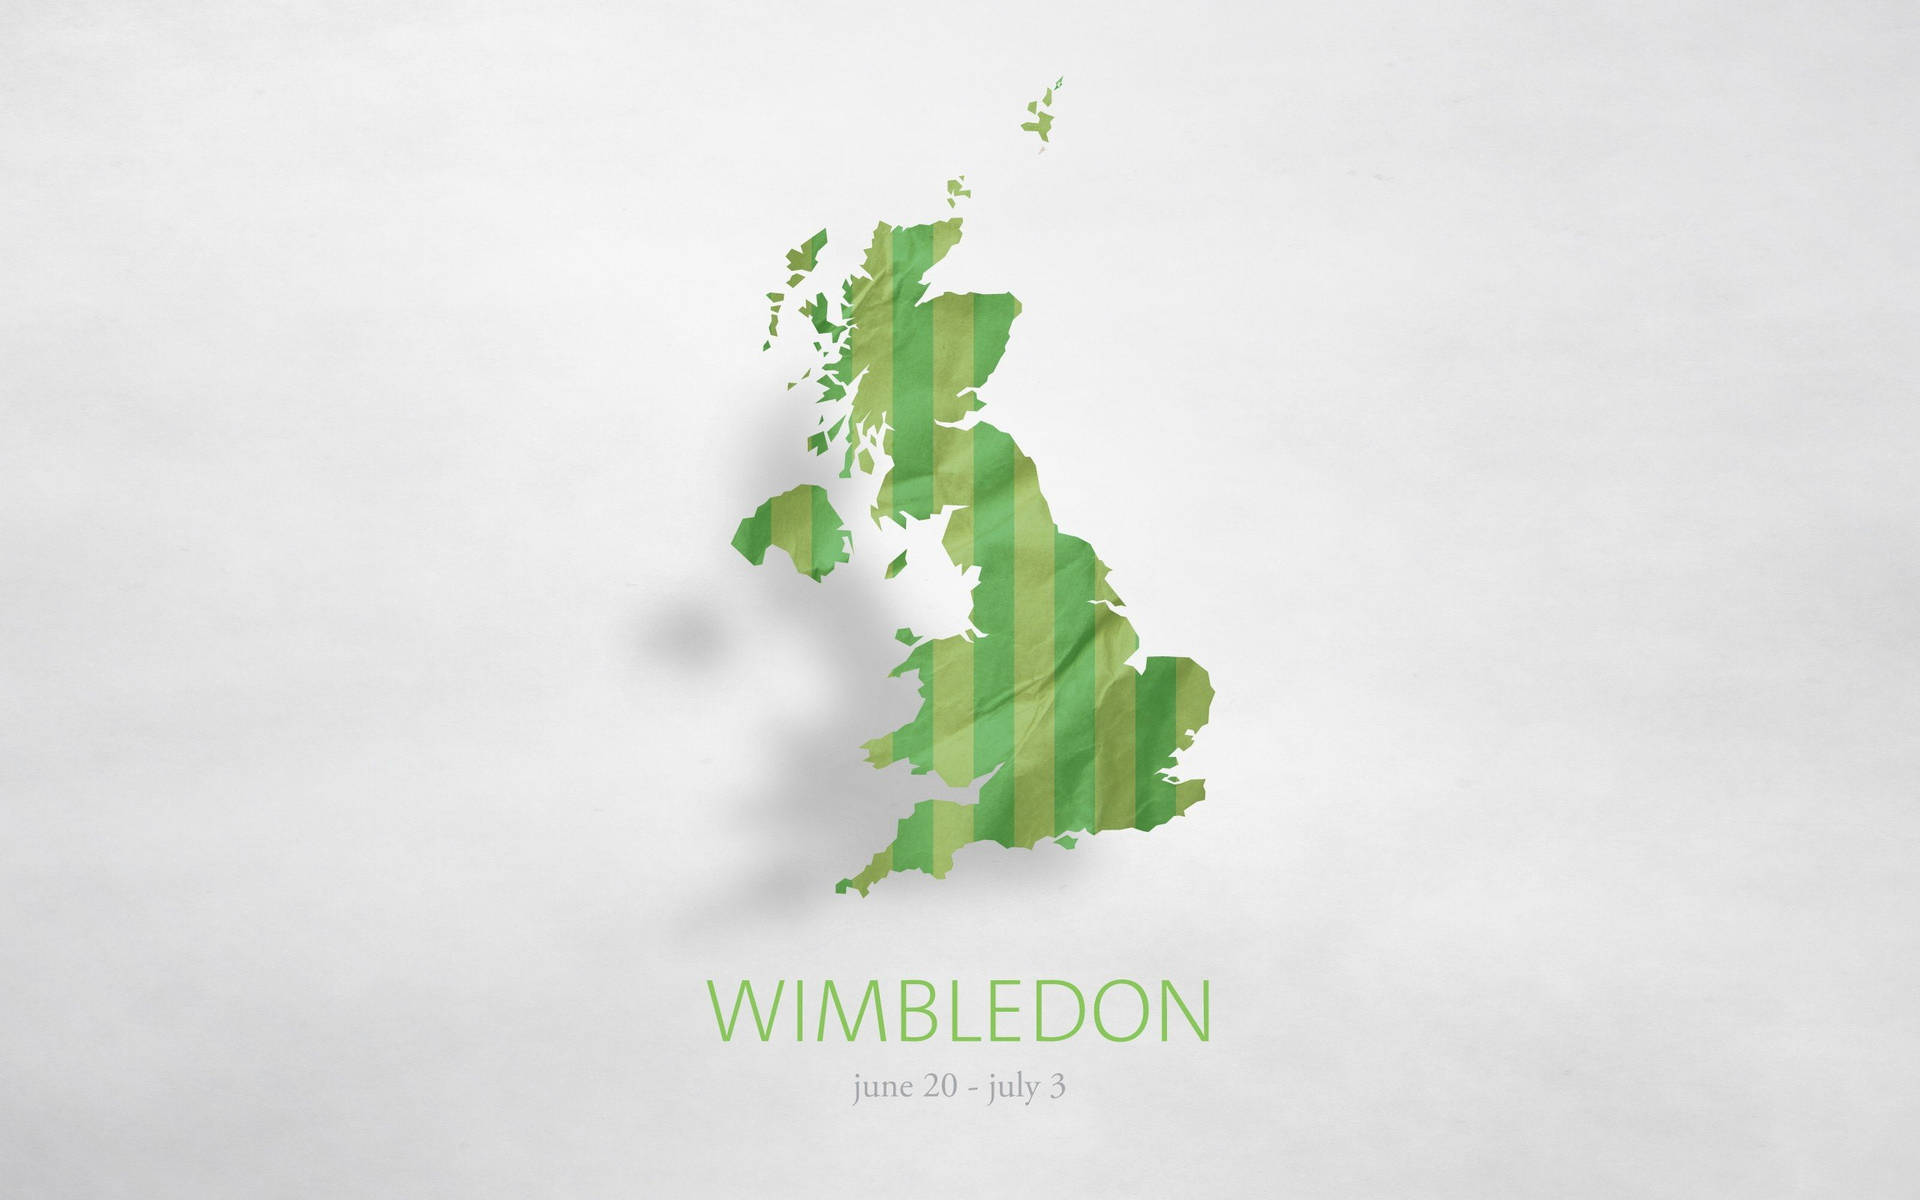 Wimbledon Map Of England Background